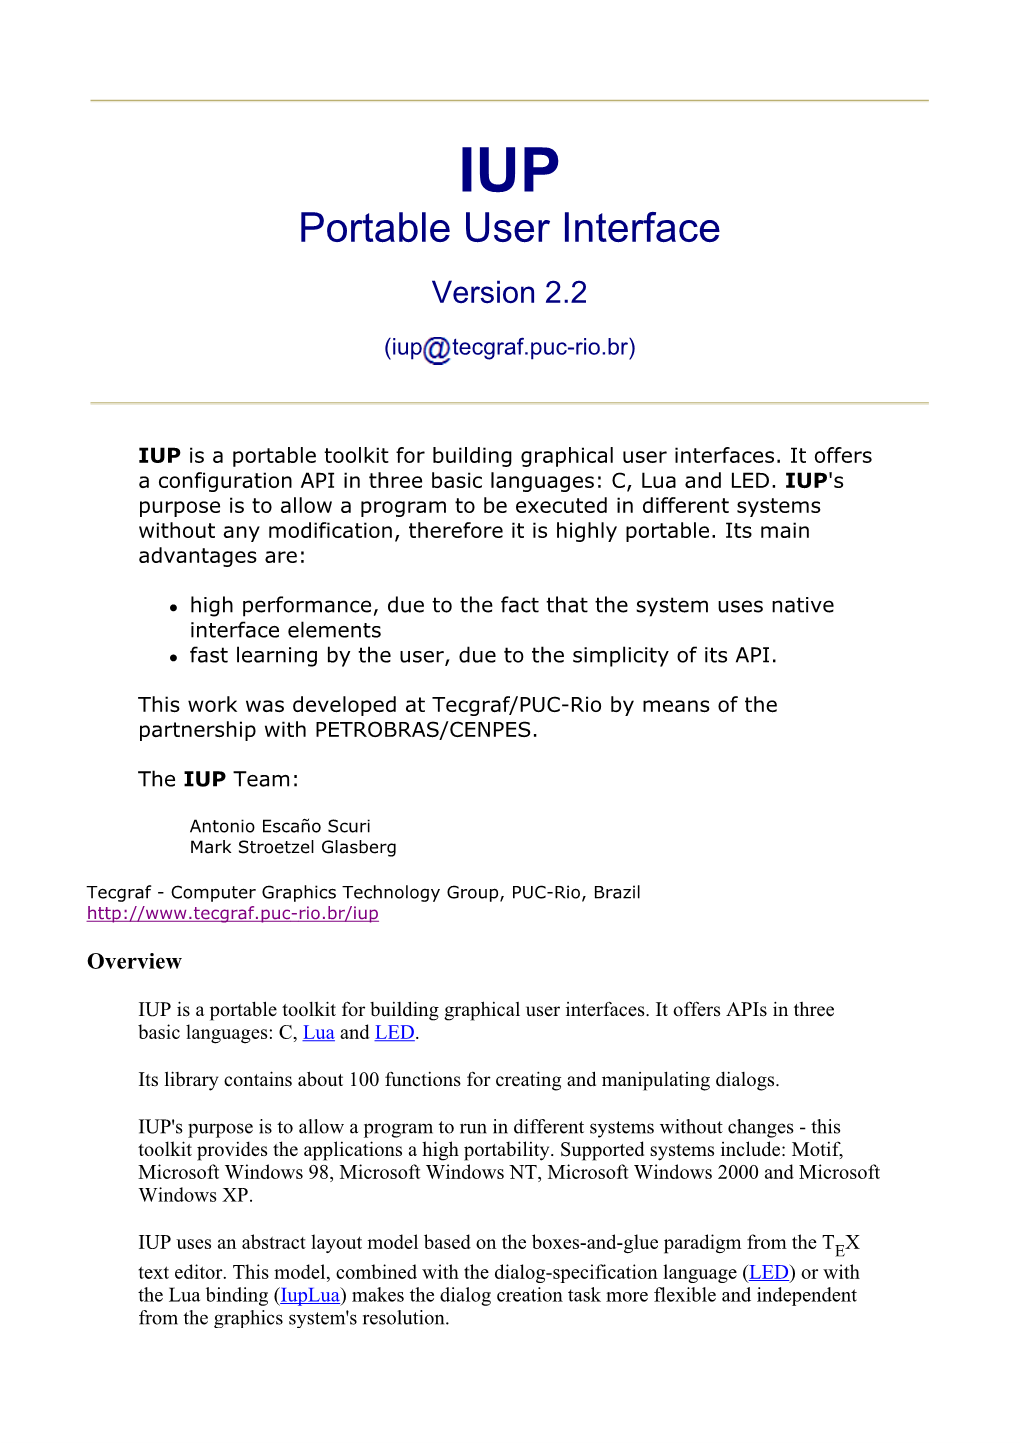 IUP Portable User Interface